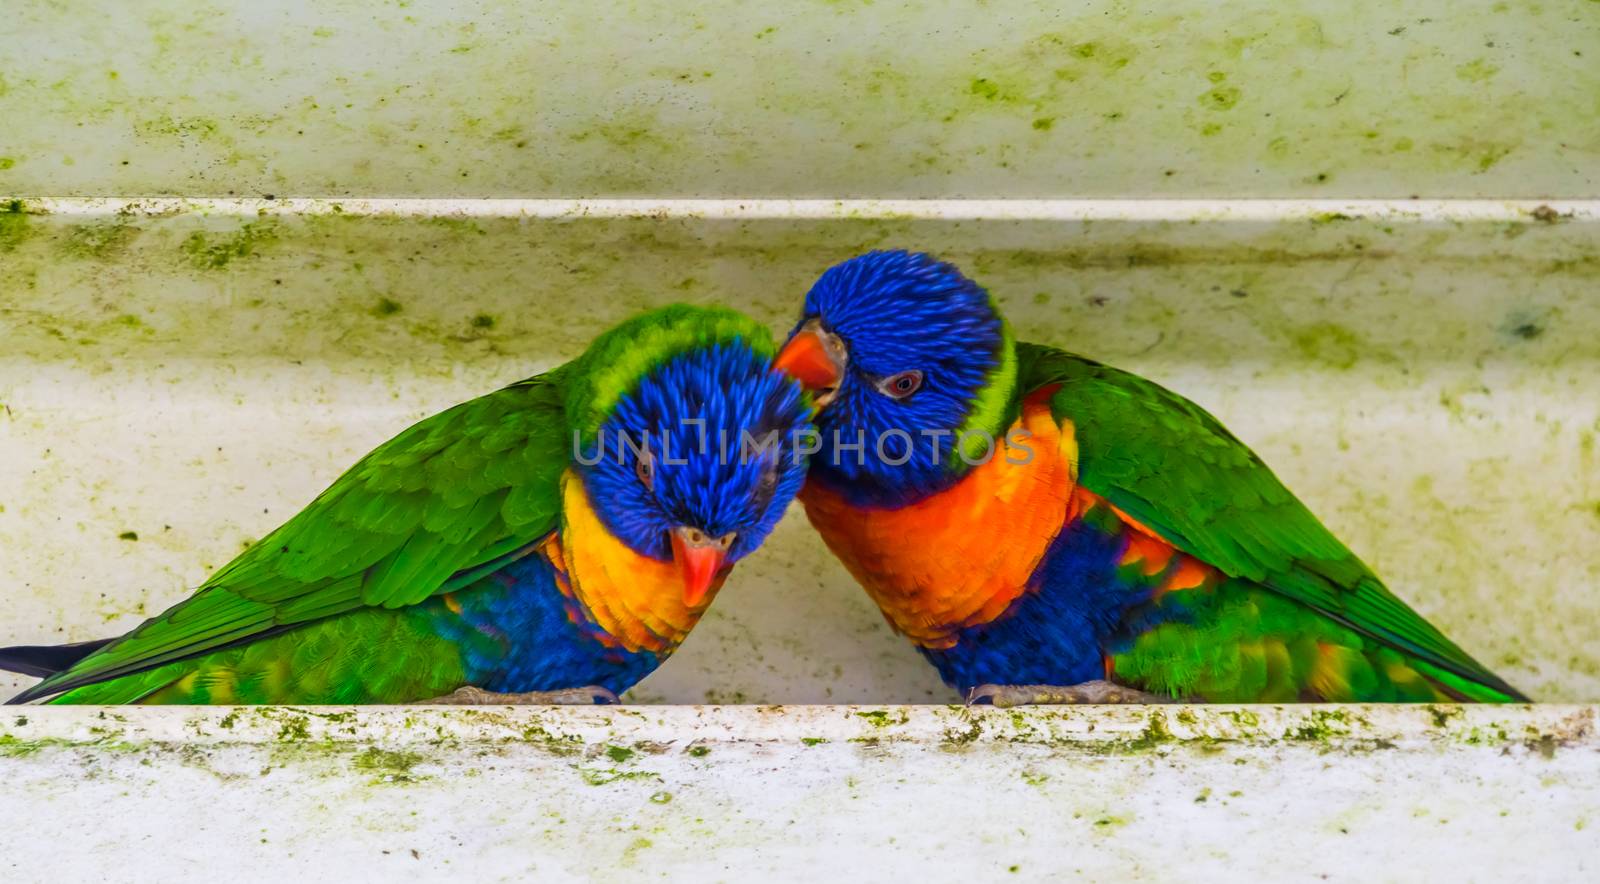 closeup of a rainbow lorikeet couple preening each other, Typical bird behavior, Tropical animal specie from Australia